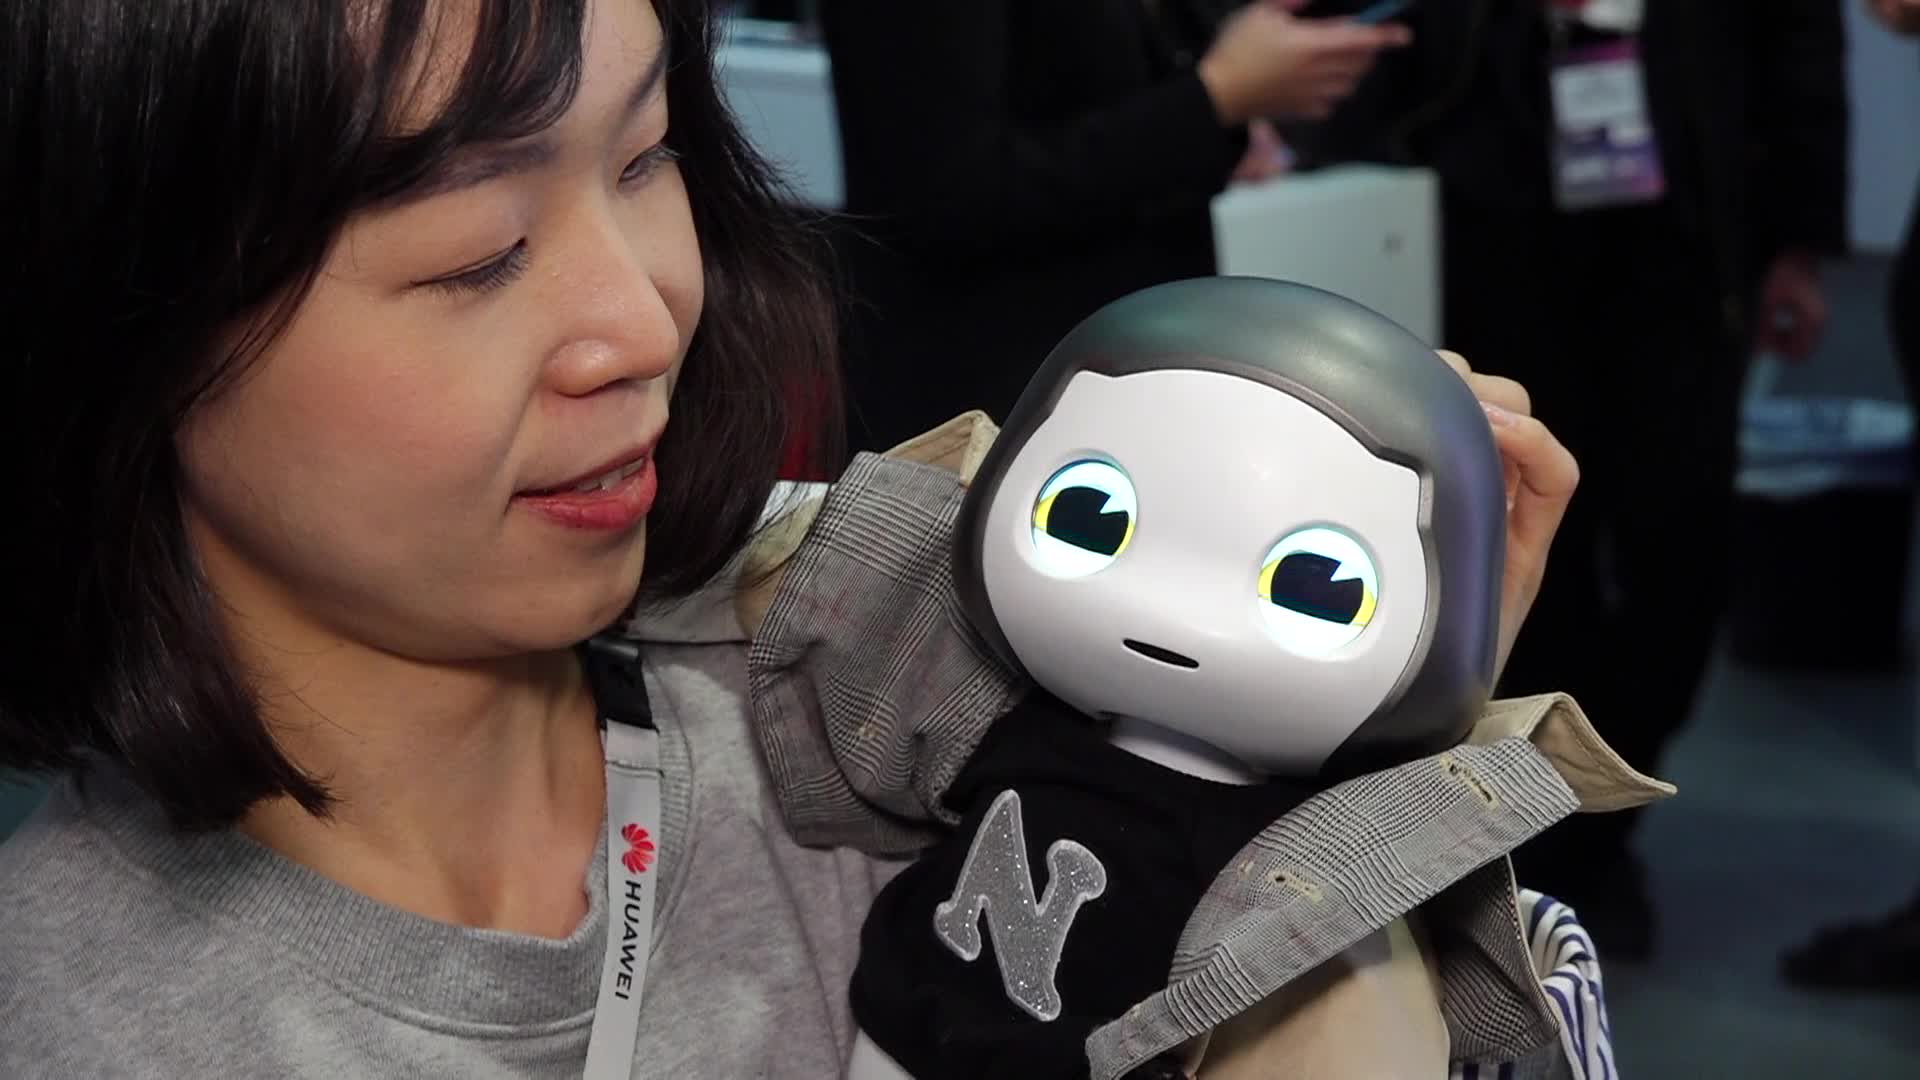 Liku Robot At Mobile World Congress